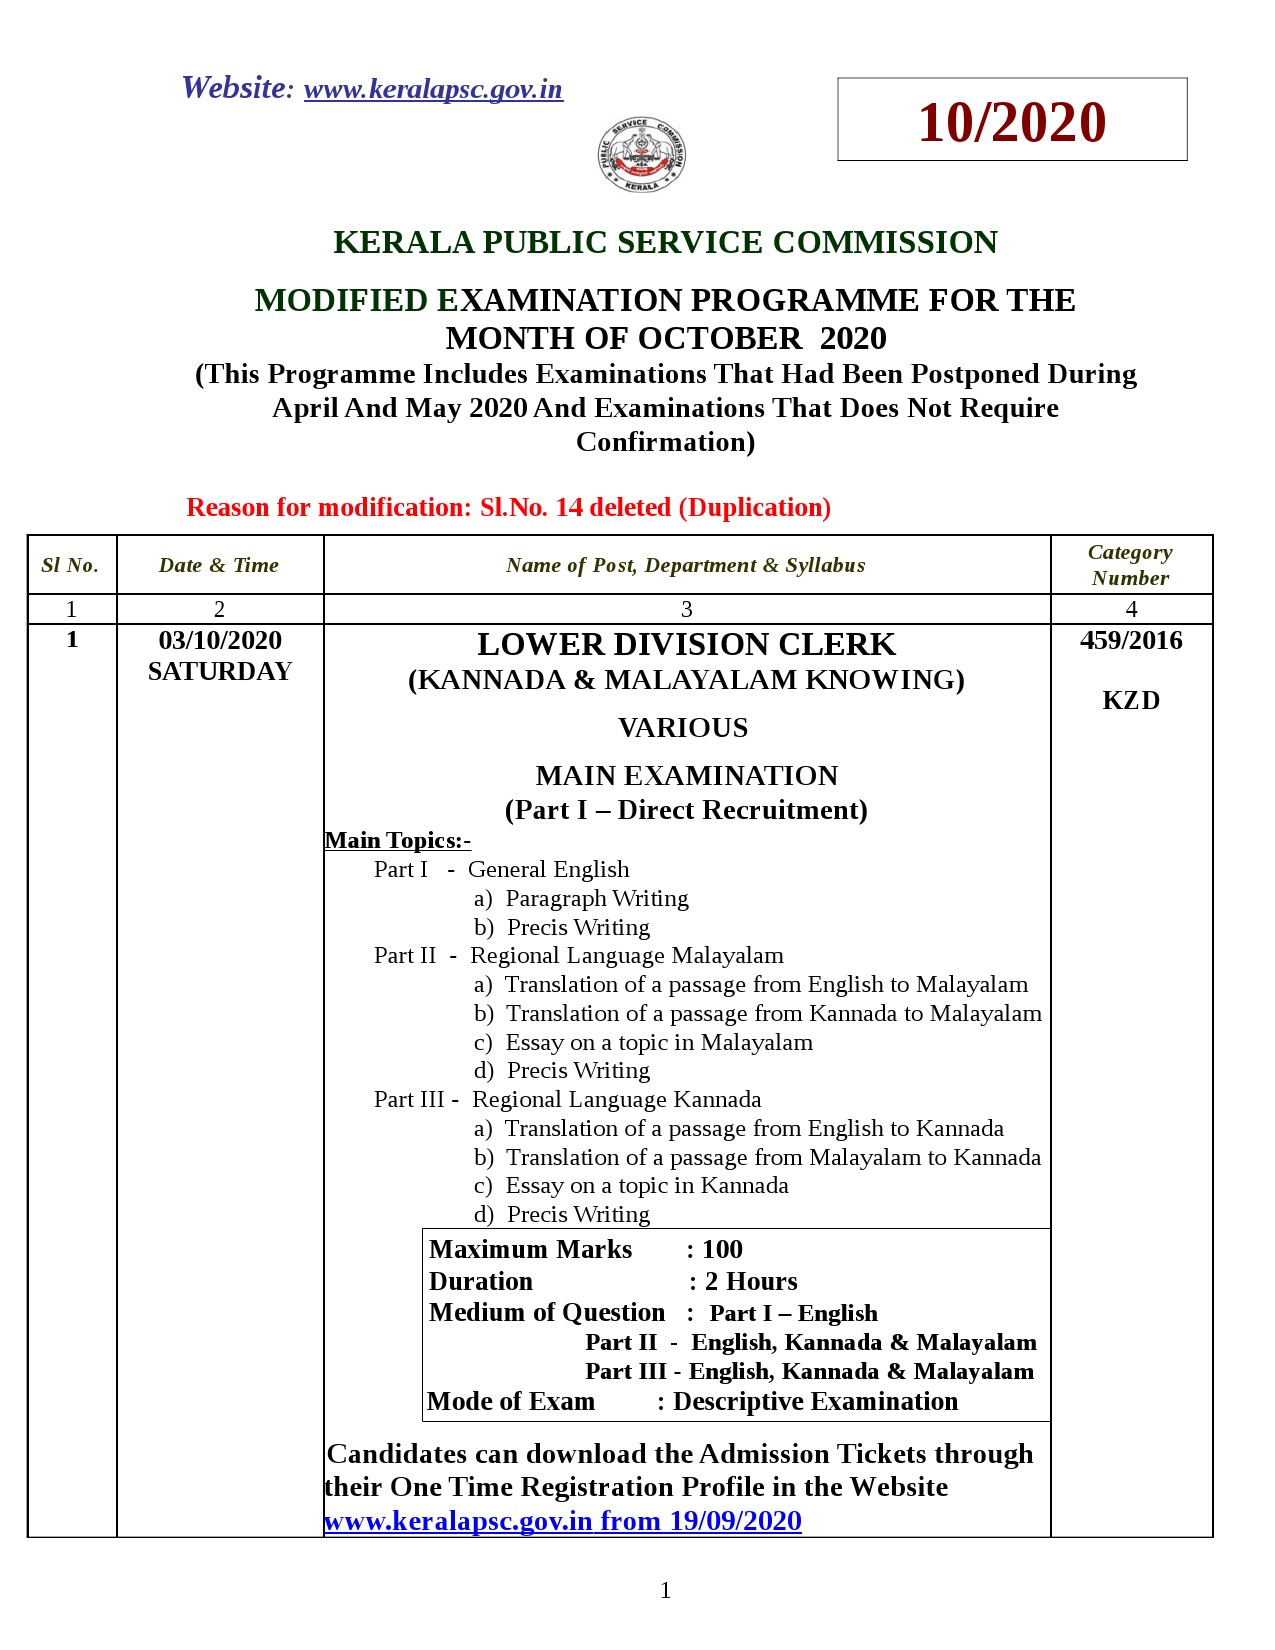 Kerala PSC Exam Calendar October 2020 - Notification Image 1